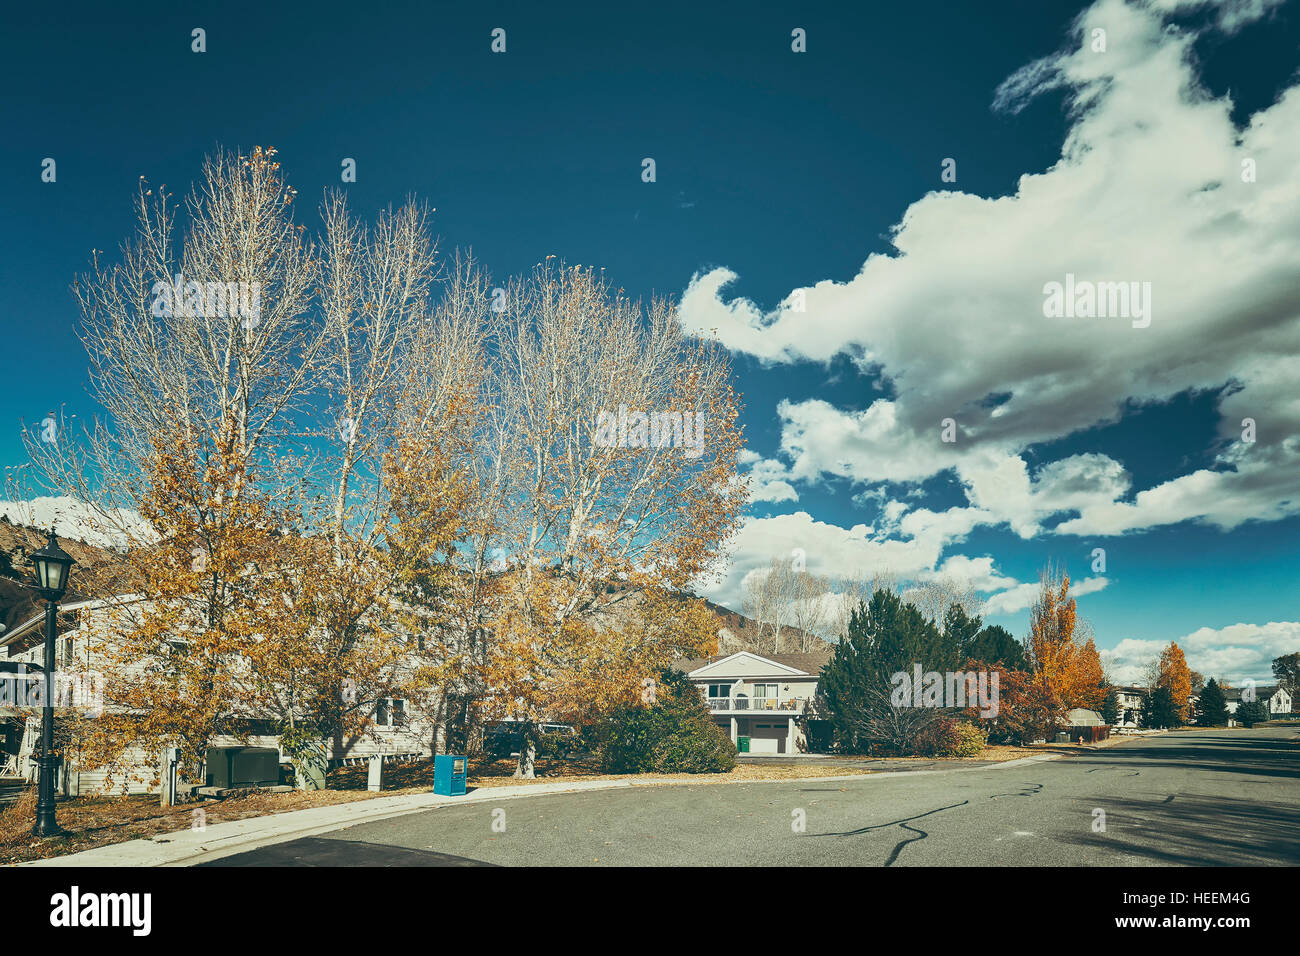 Retro getönten wenig Stadt-Straße in Herbst, Colorado, USA. Stockfoto